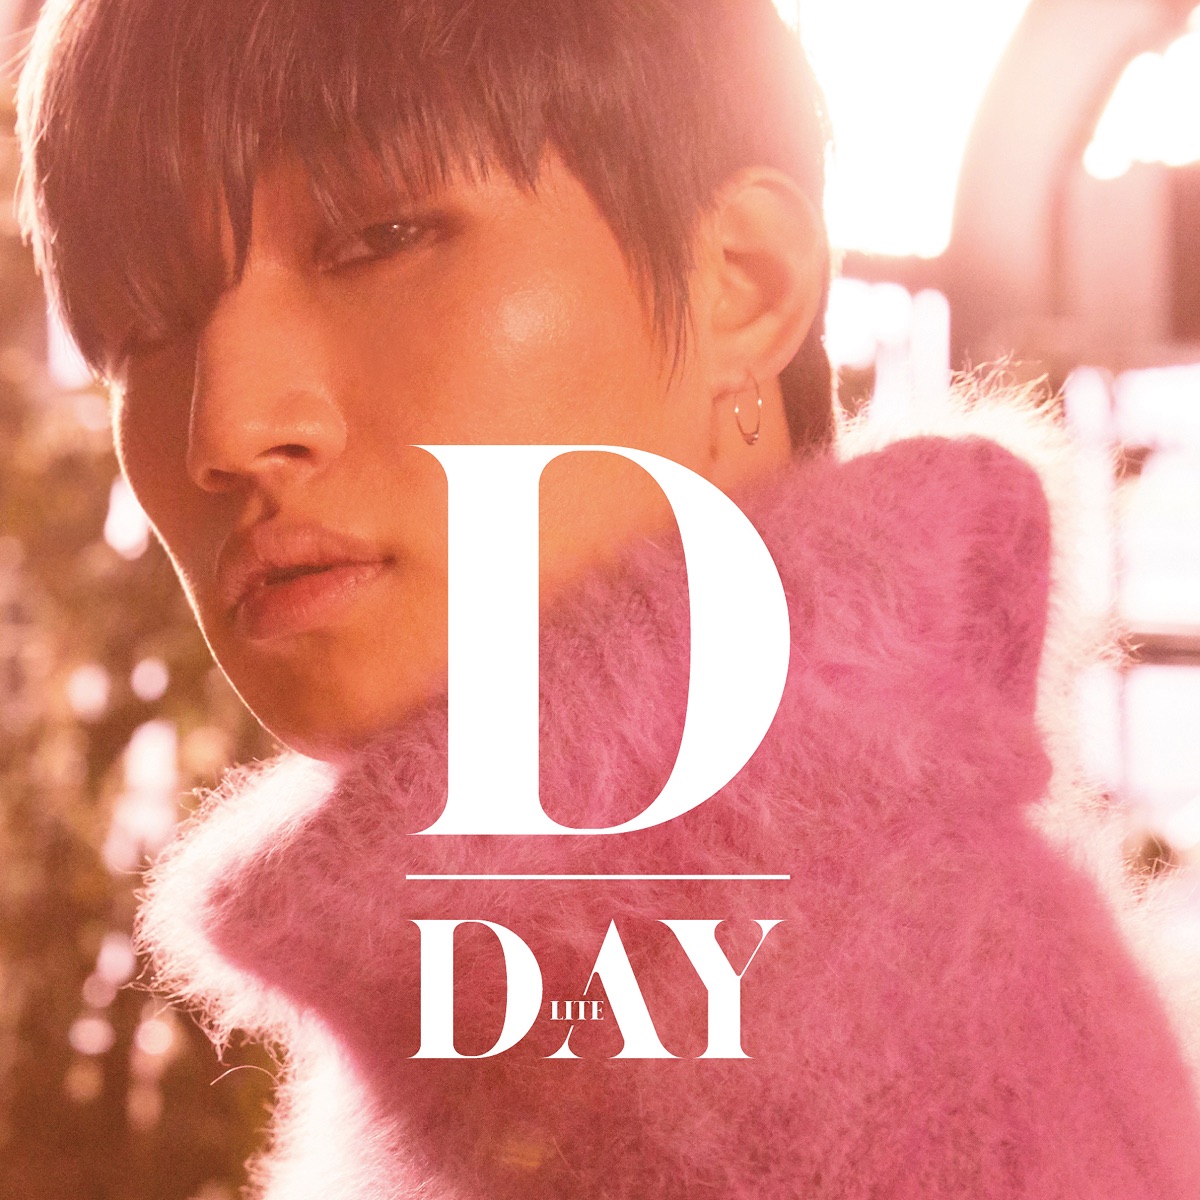 D-LITE (from BIGBANG) – D-Day